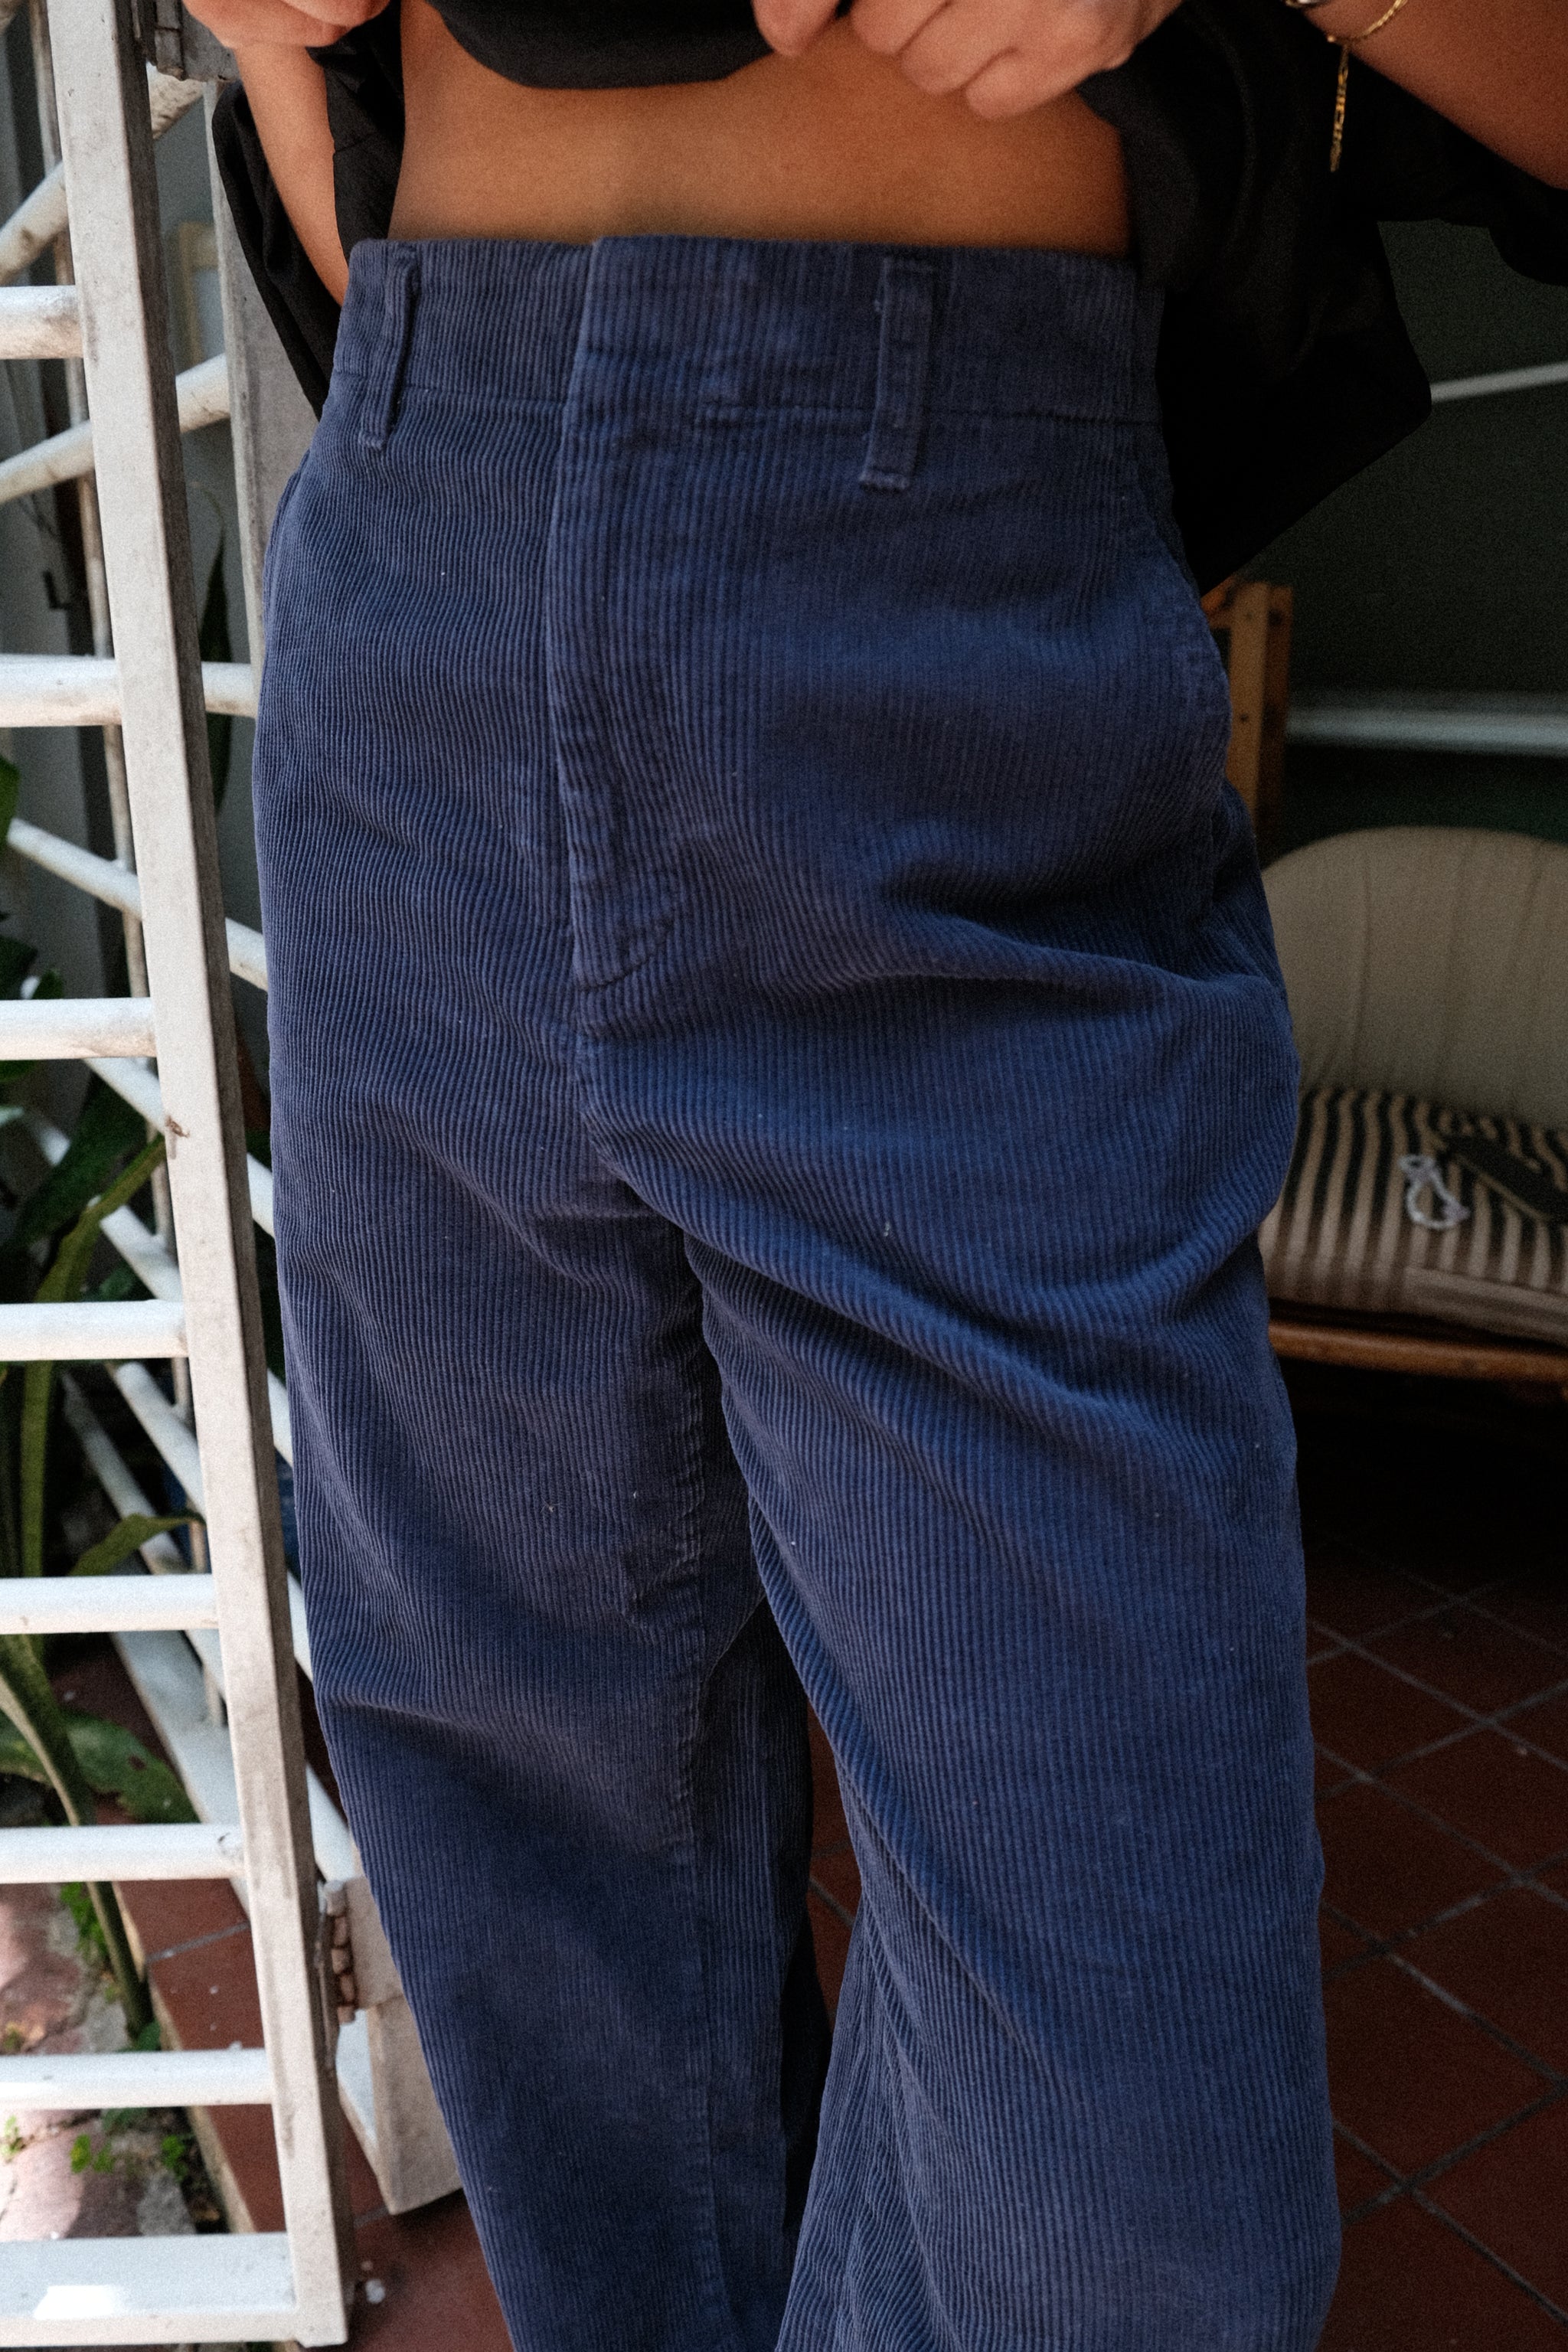 NEW HALARA Corduroy Pants Women Casual Every Day SMALL PETITE SP NAVY Blue  